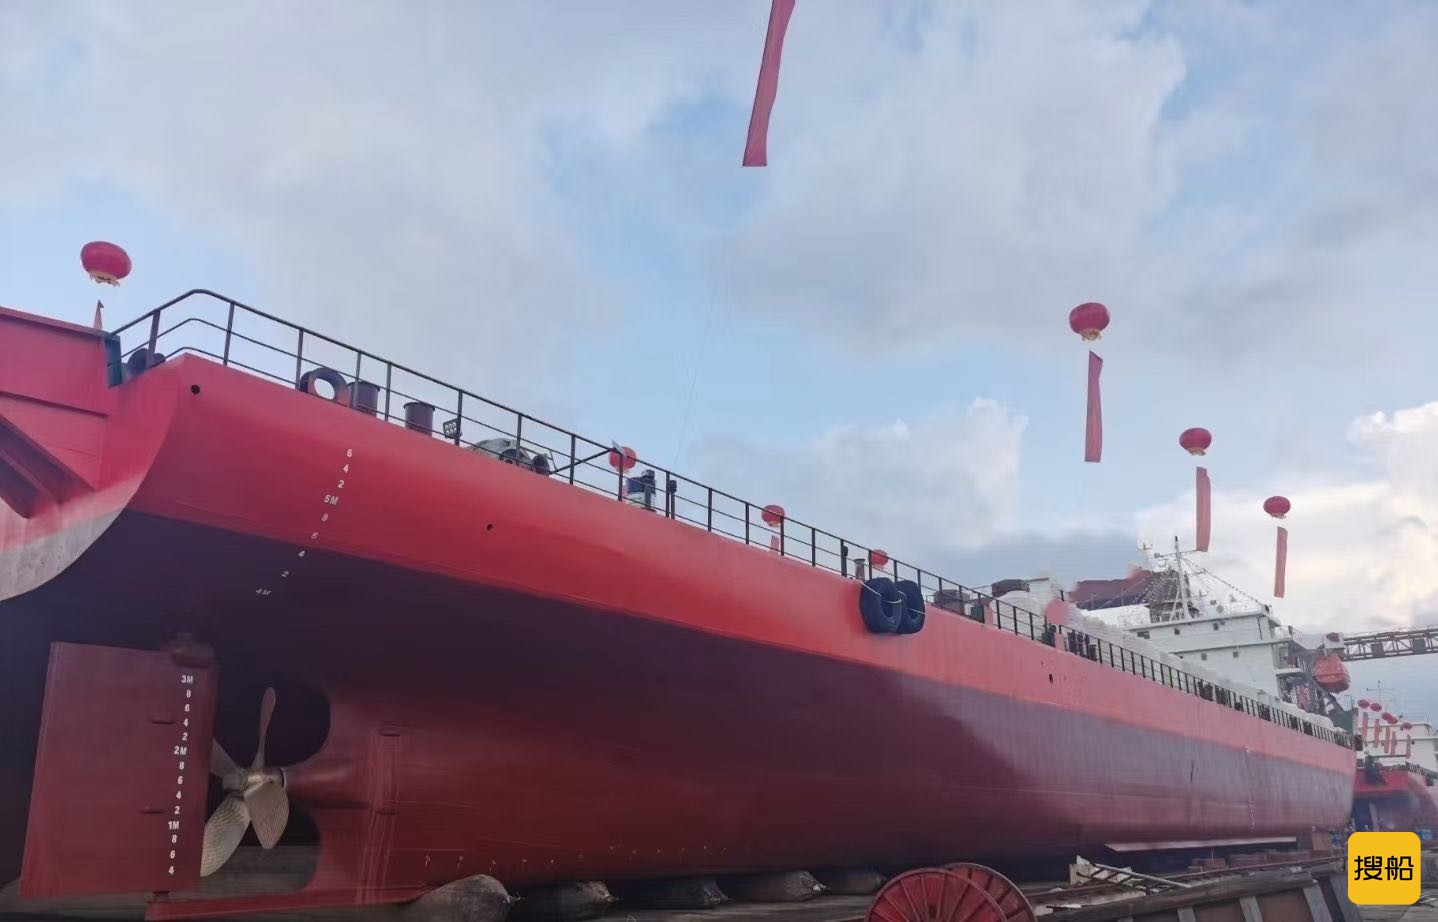 出租6200吨甲板船